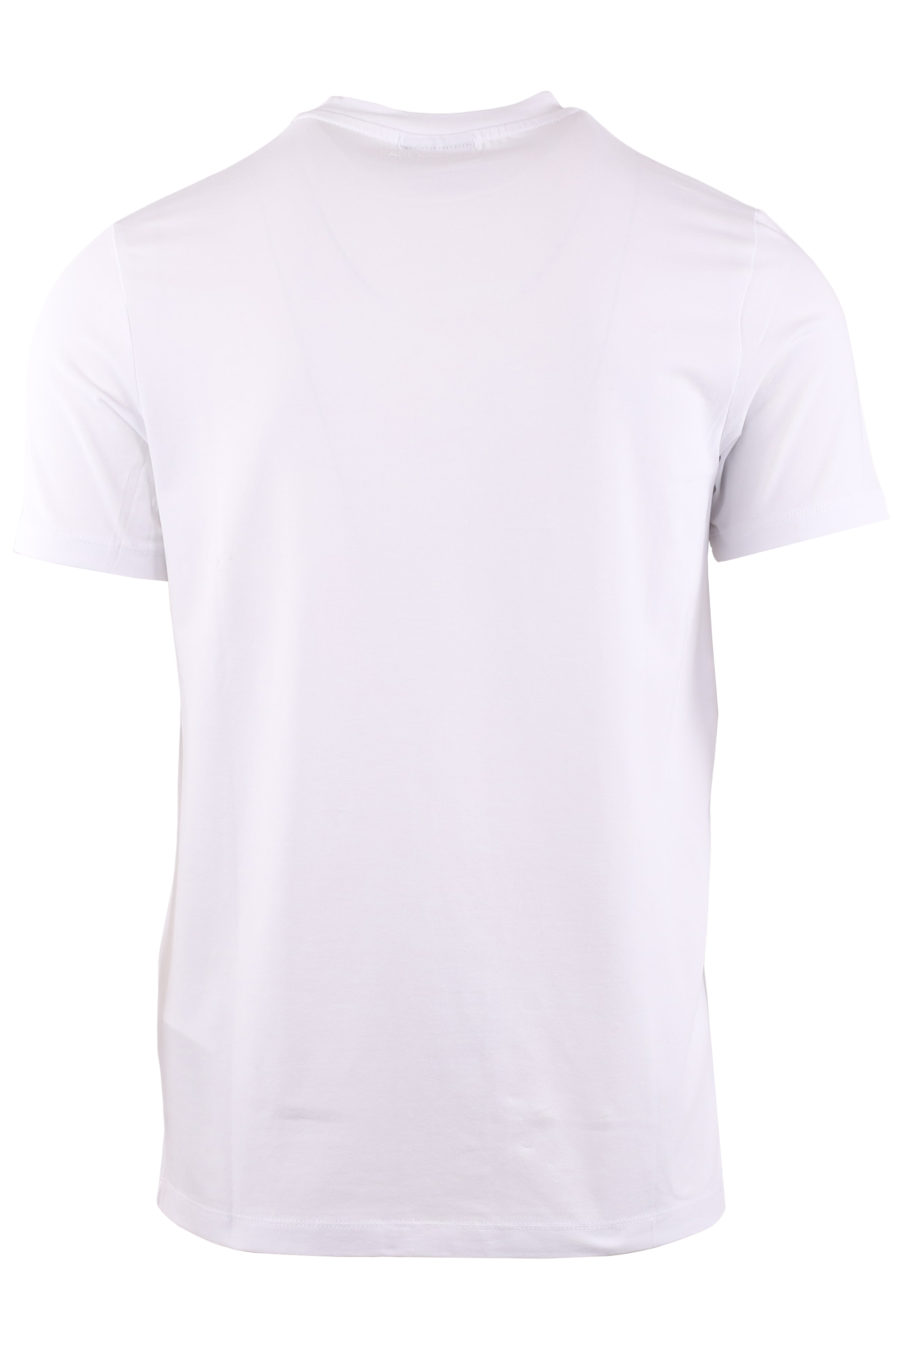 T-shirt blanc avec logo - e353f107147a737f0197ab8db96a2b4806465204